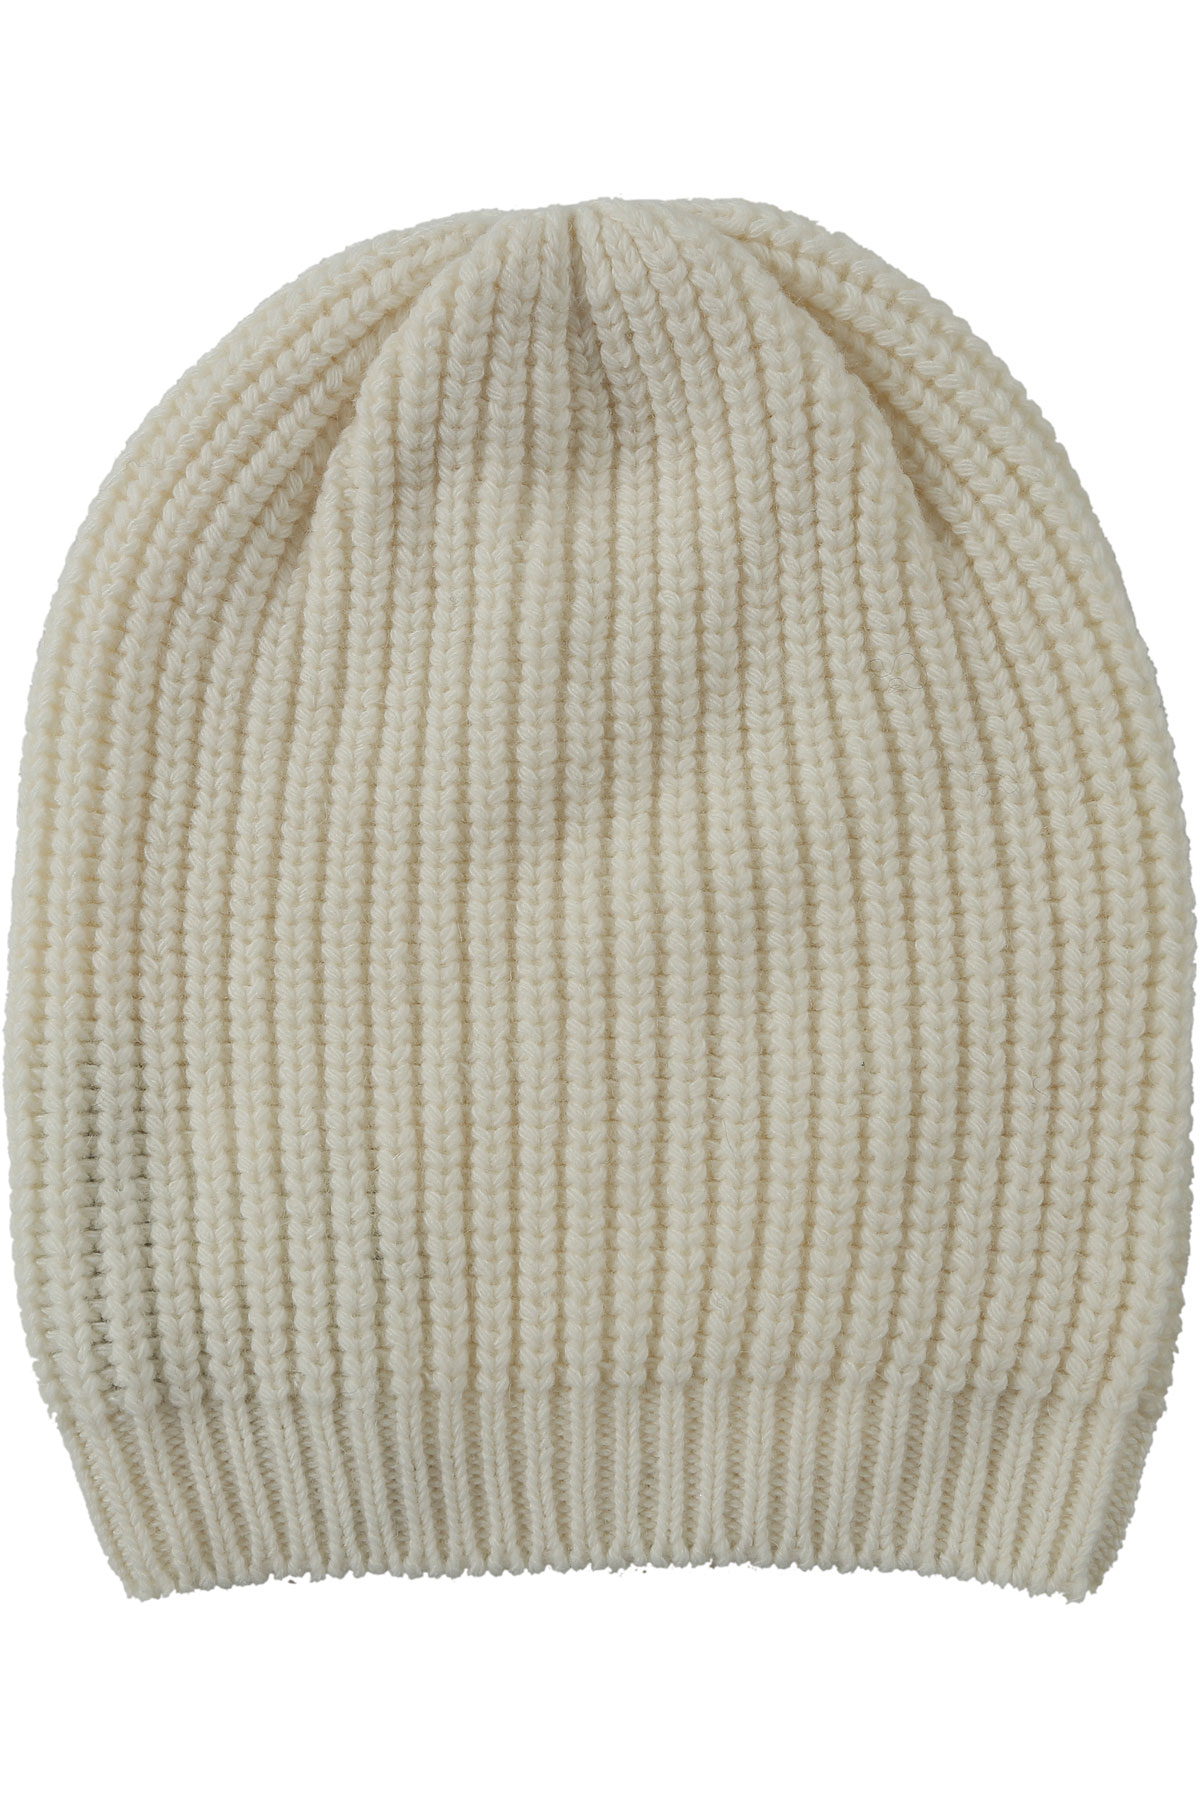 Angelo Marani Chapeau Femme , Blanc laiteux, Laine, 2017, 40 42 44 46 48 50 one size